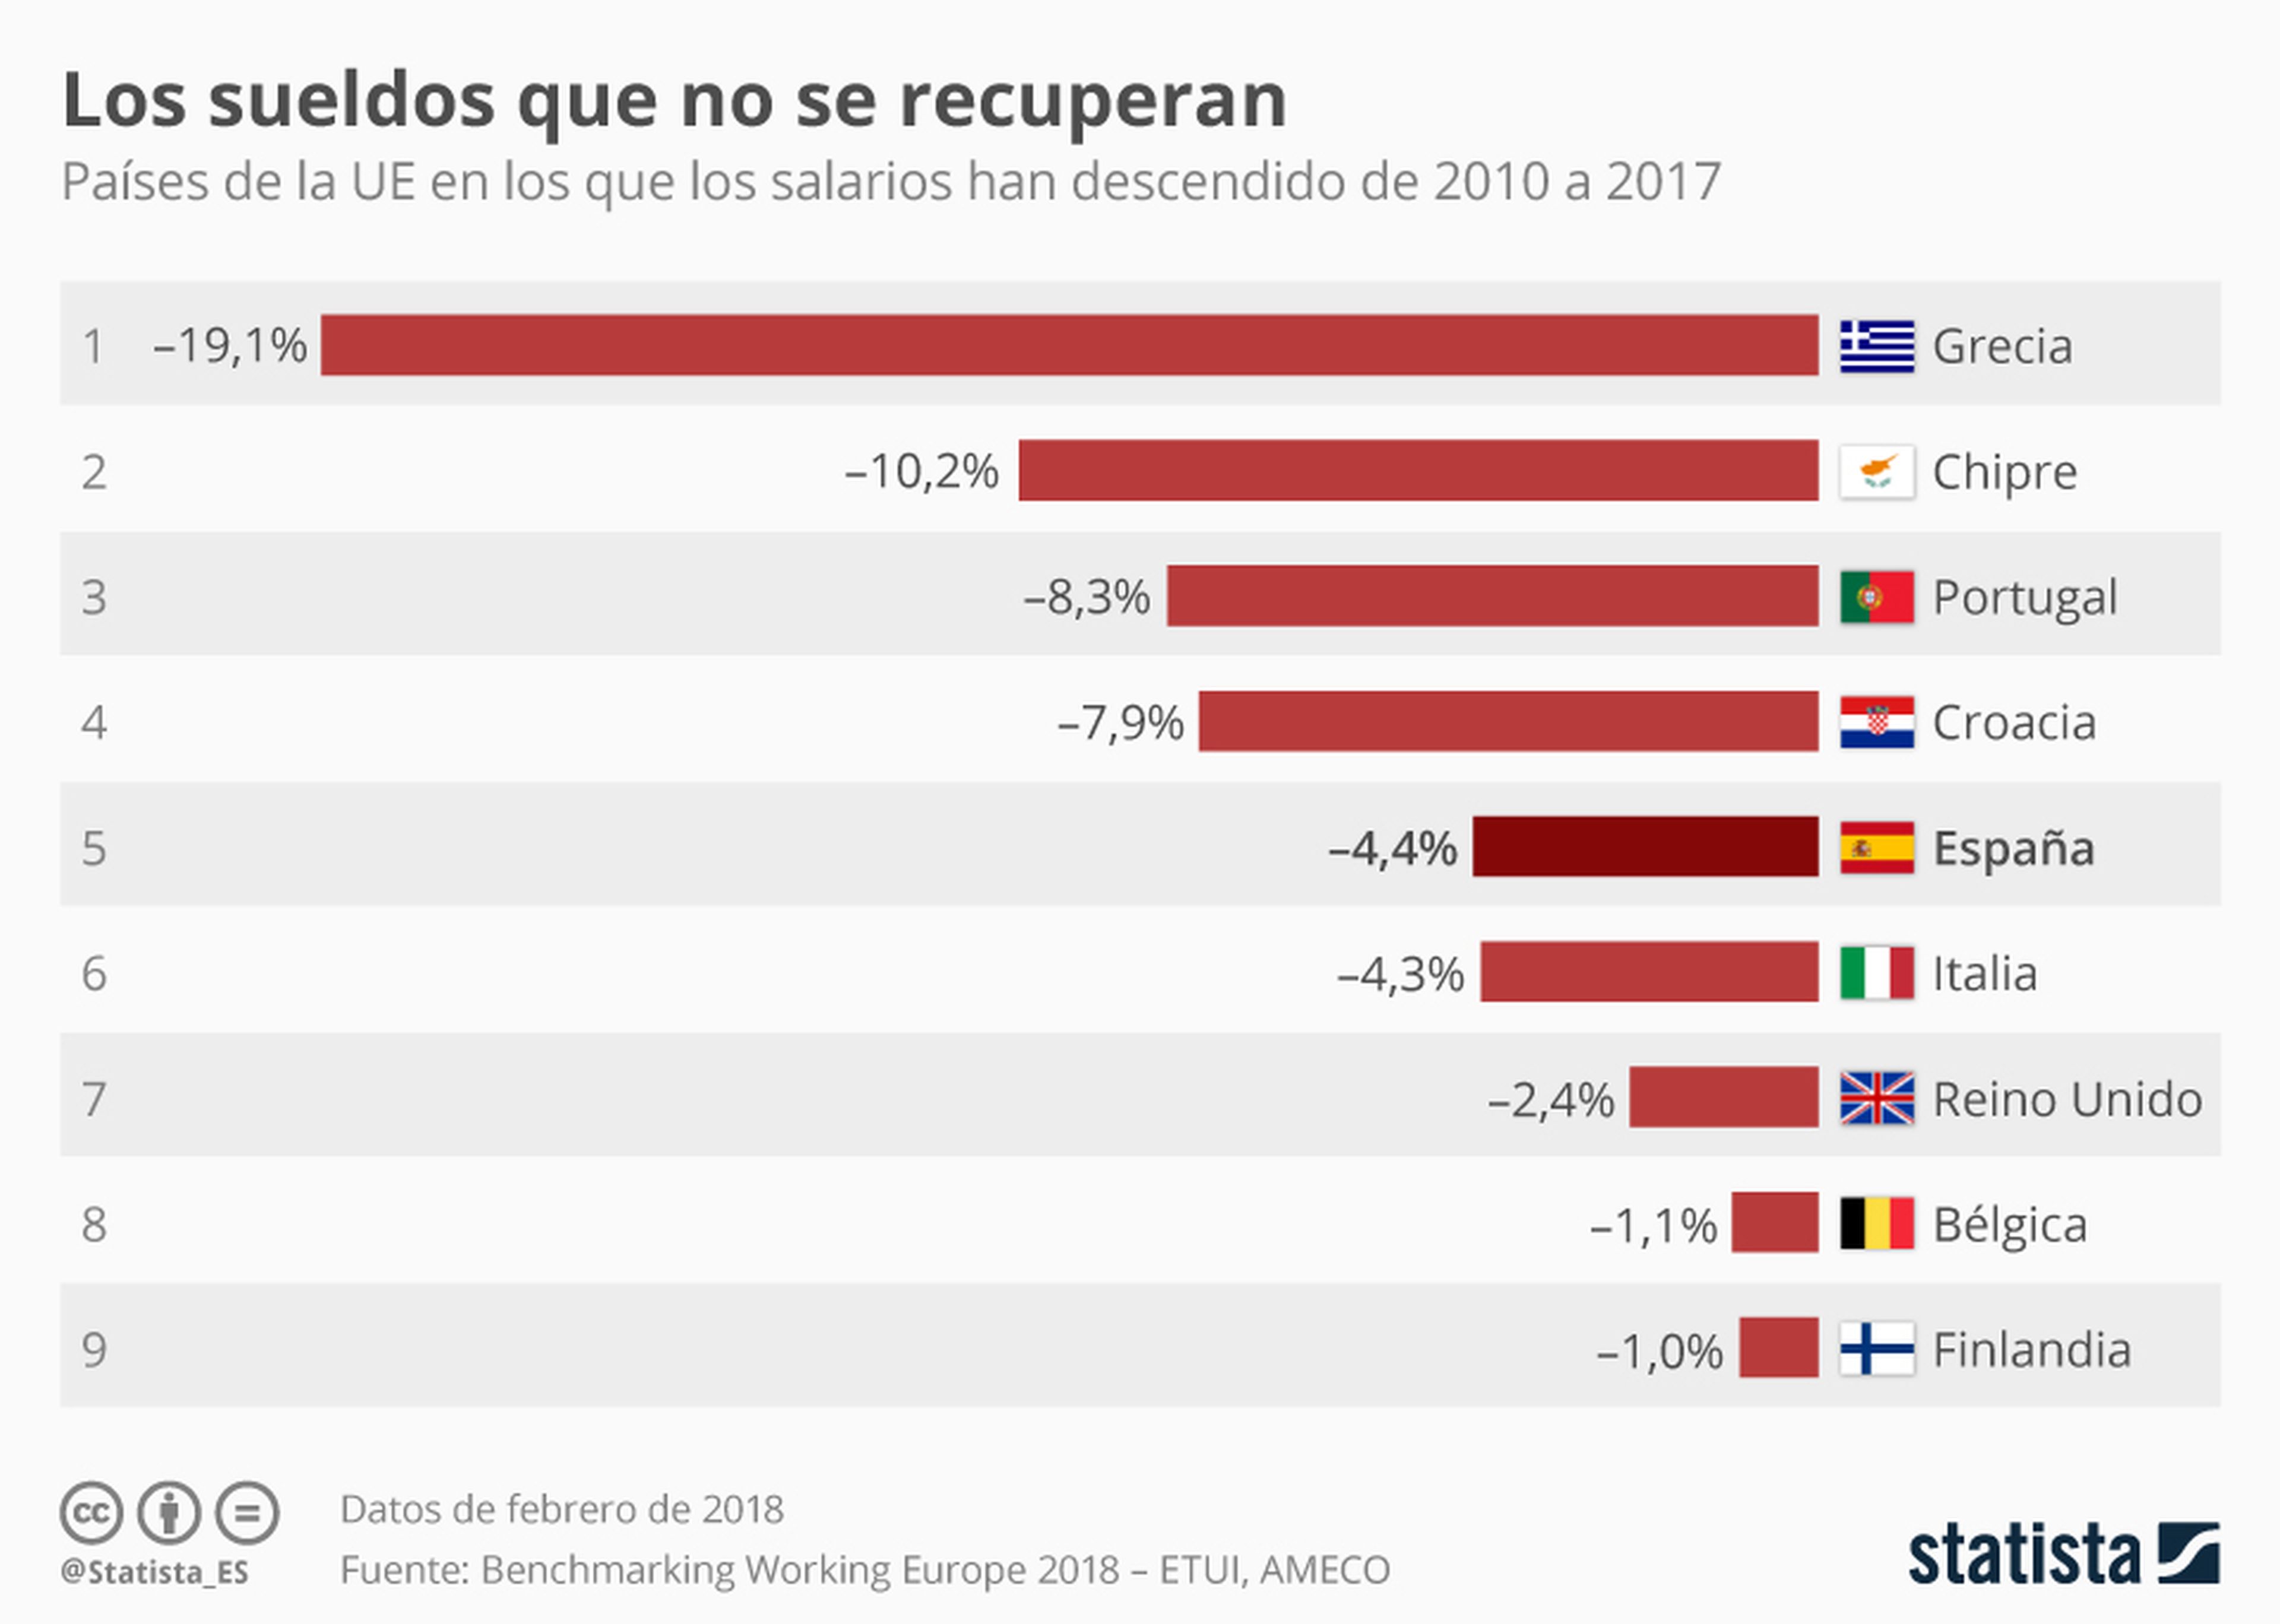 Grafico salarios europeos desde 2010